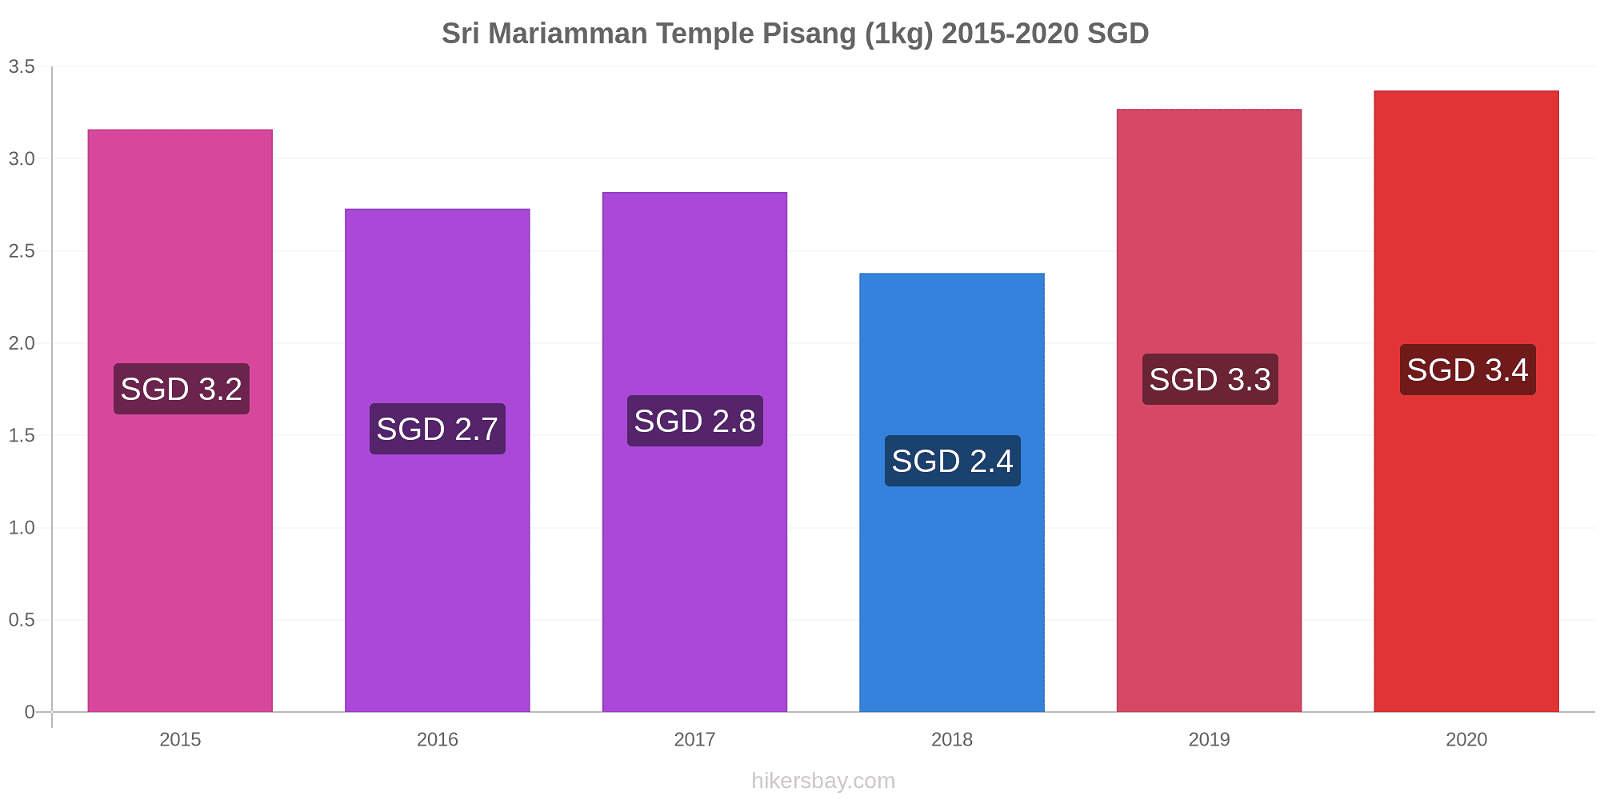 Sri Mariamman Temple perubahan harga Pisang (1kg) hikersbay.com